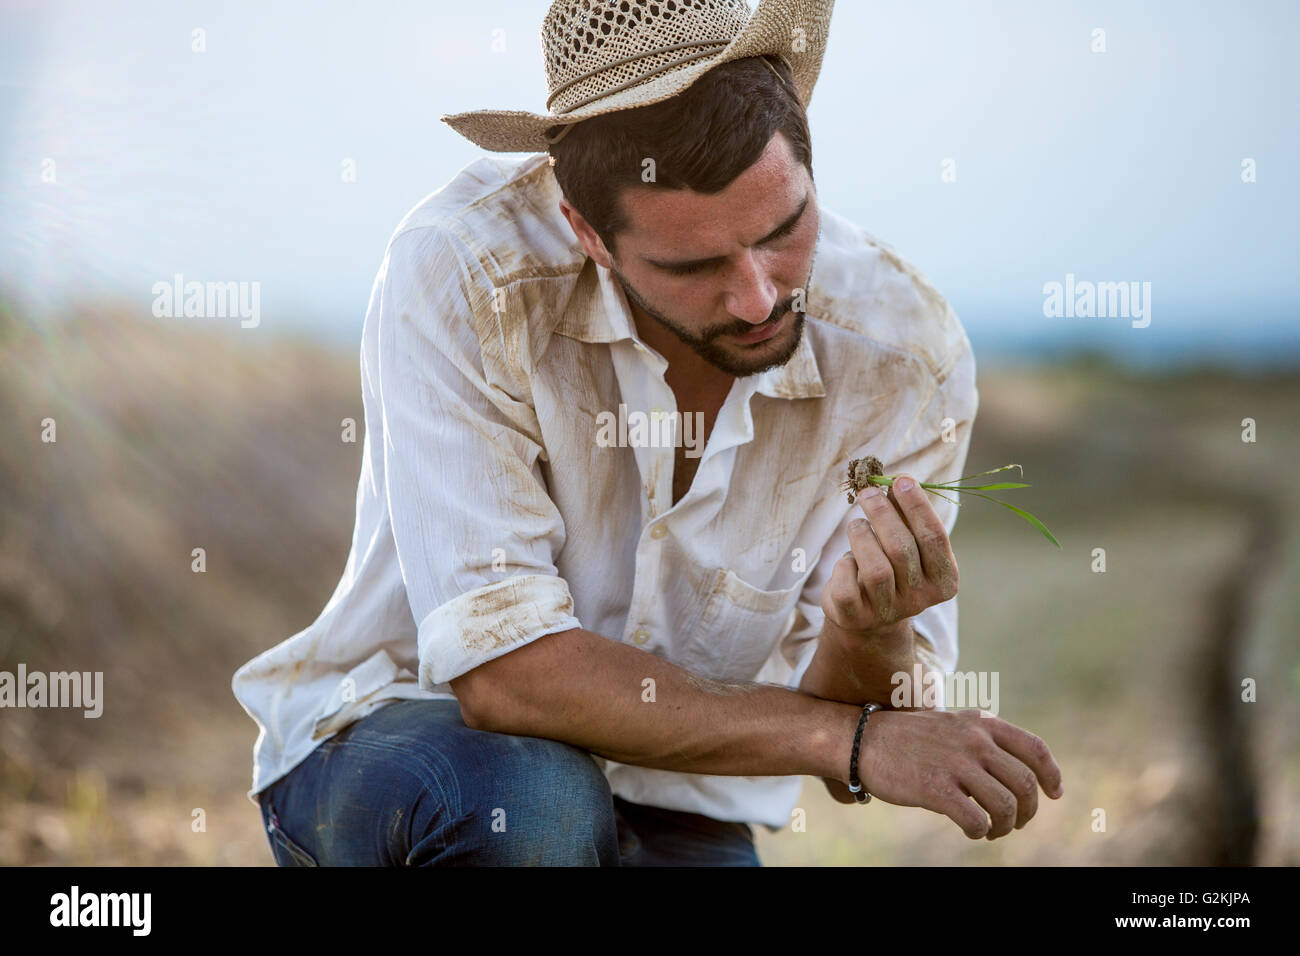 Young man examining crop plant Stock Photo